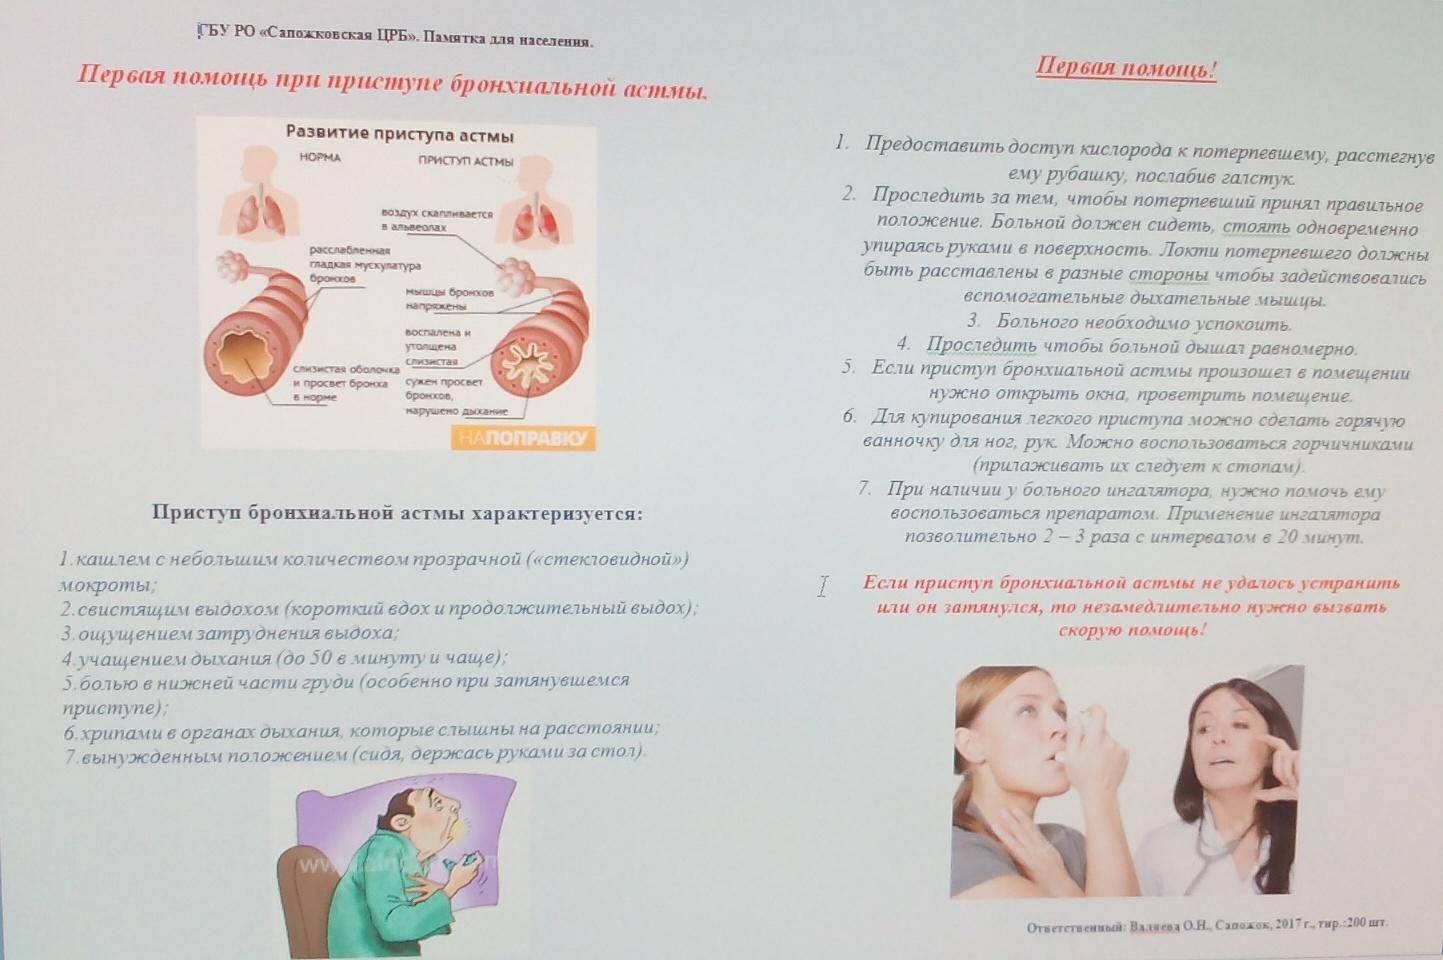 Как снять приступ астмы в домашних условиях pulmono.ru
как снять приступ астмы в домашних условиях